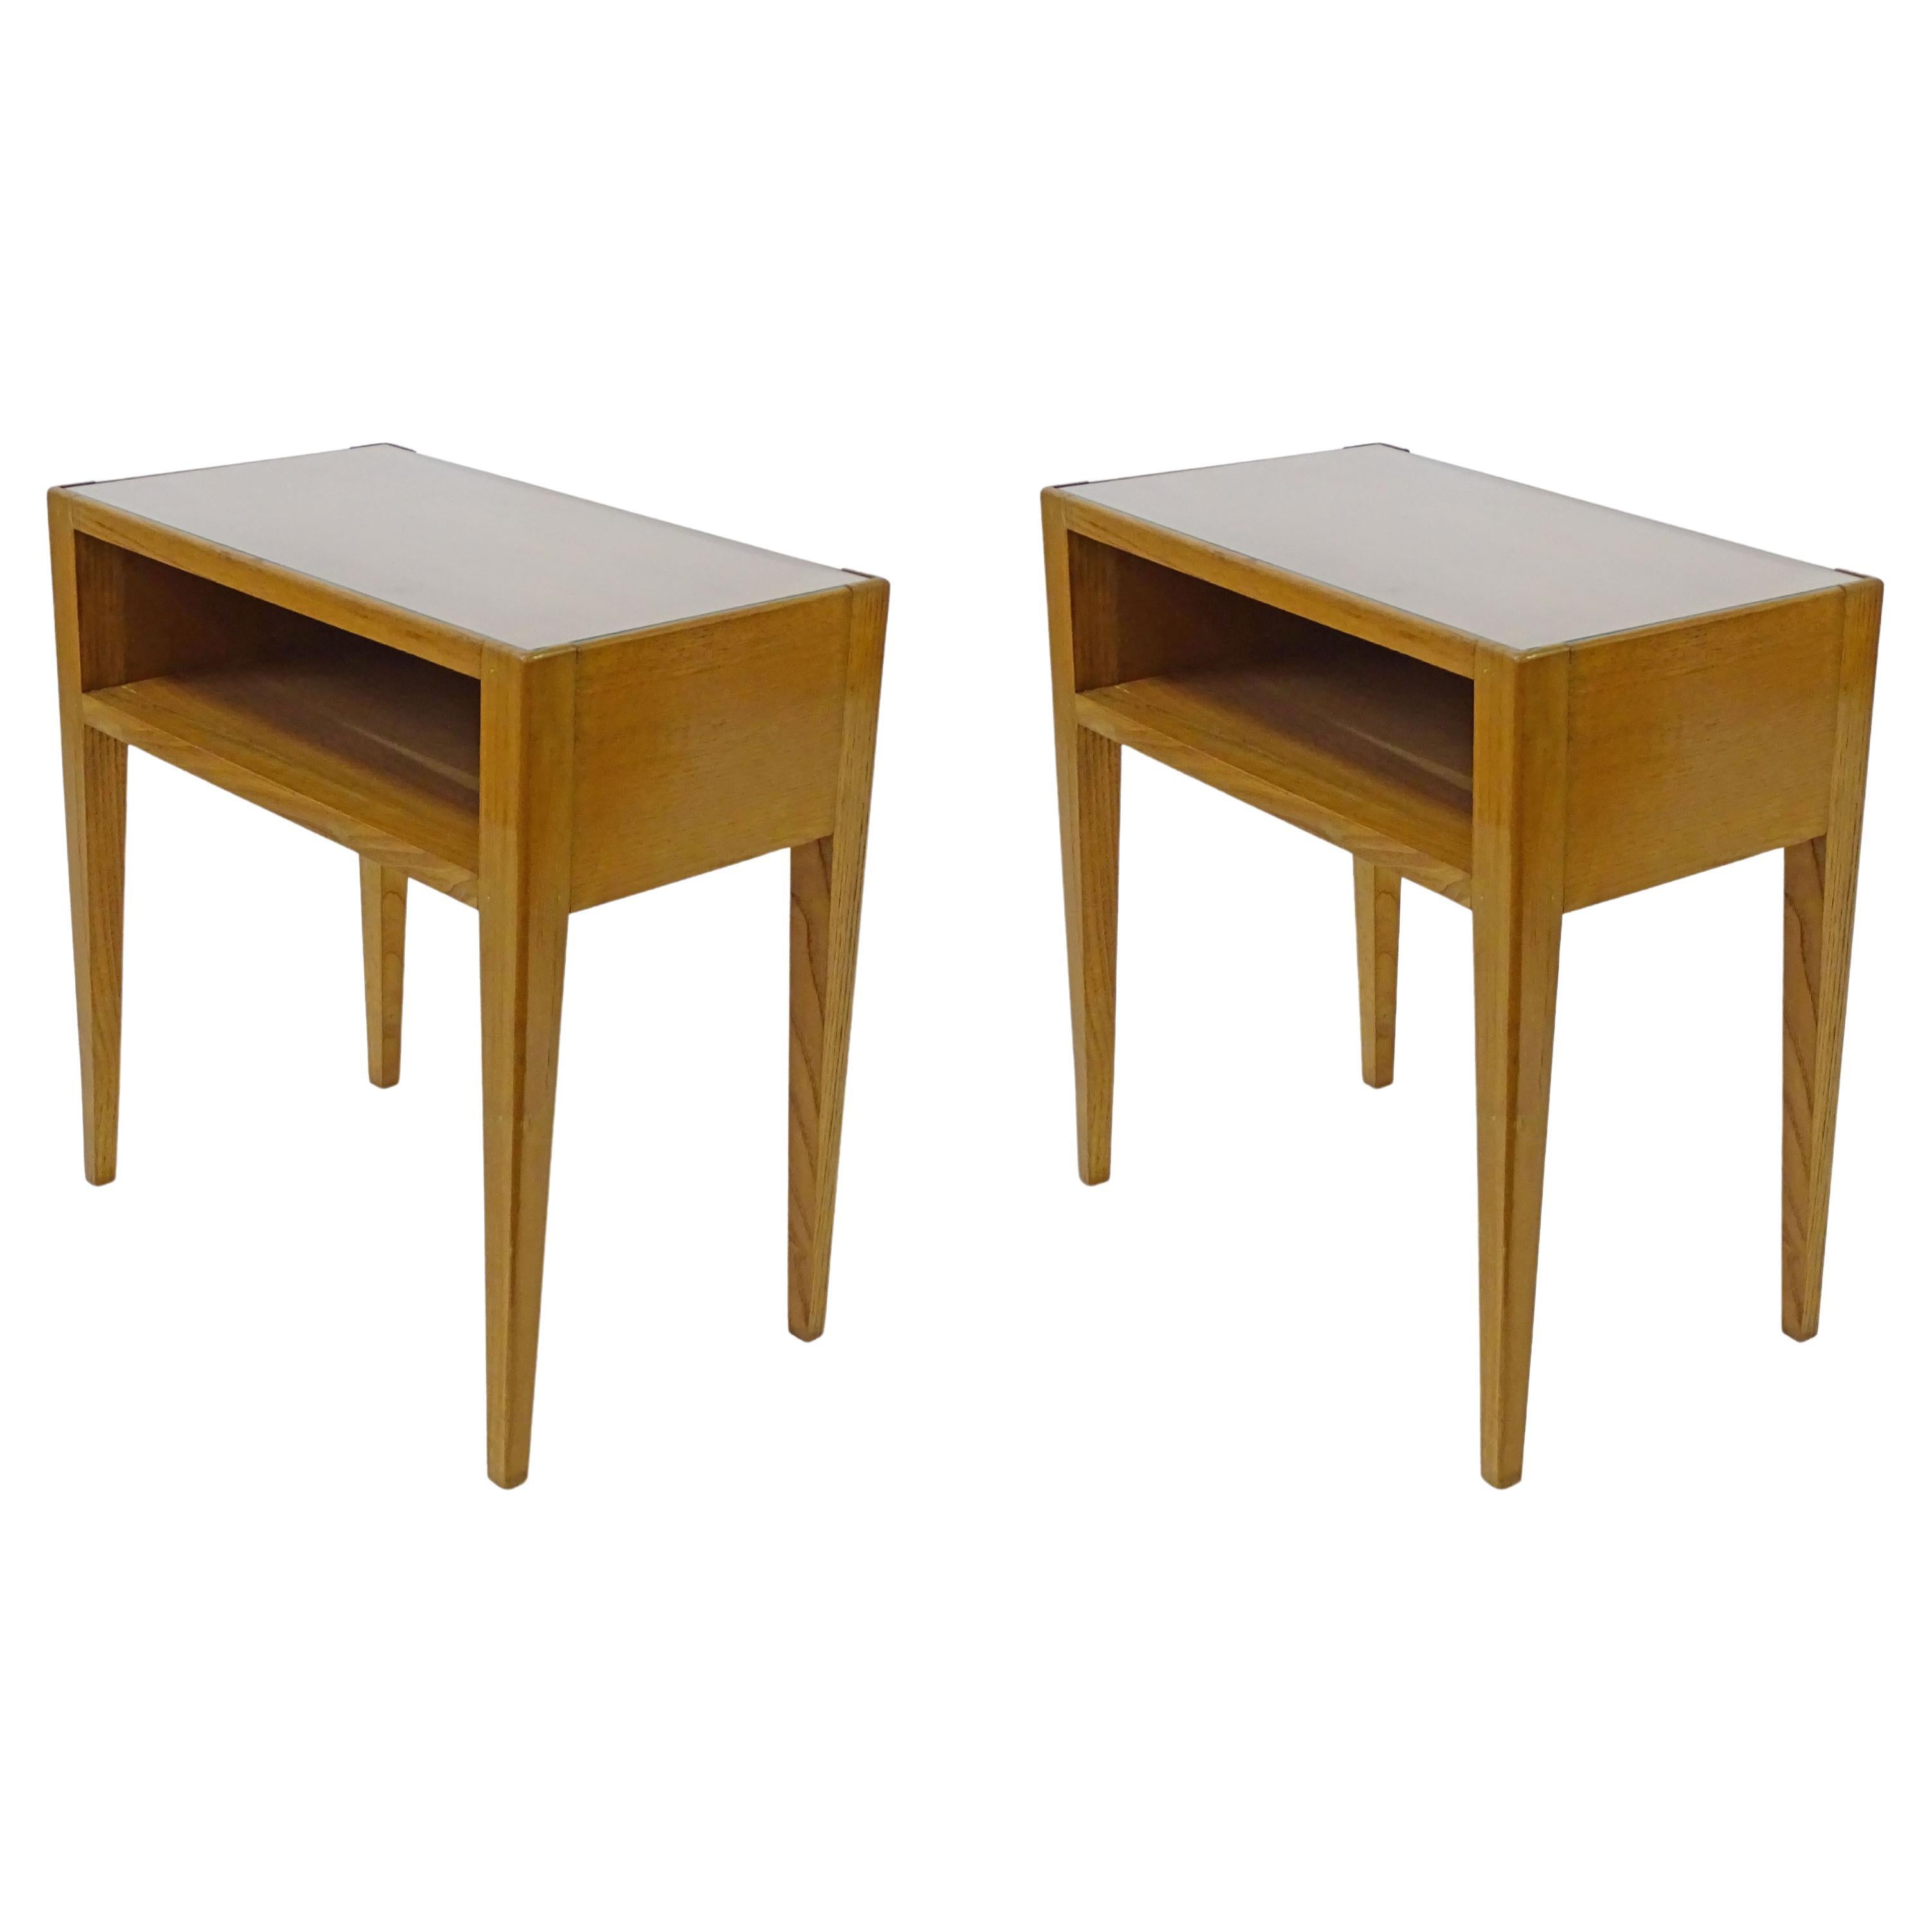 Osvaldo Borsani minimal pair of bedside tables in wood, Italy 1940s